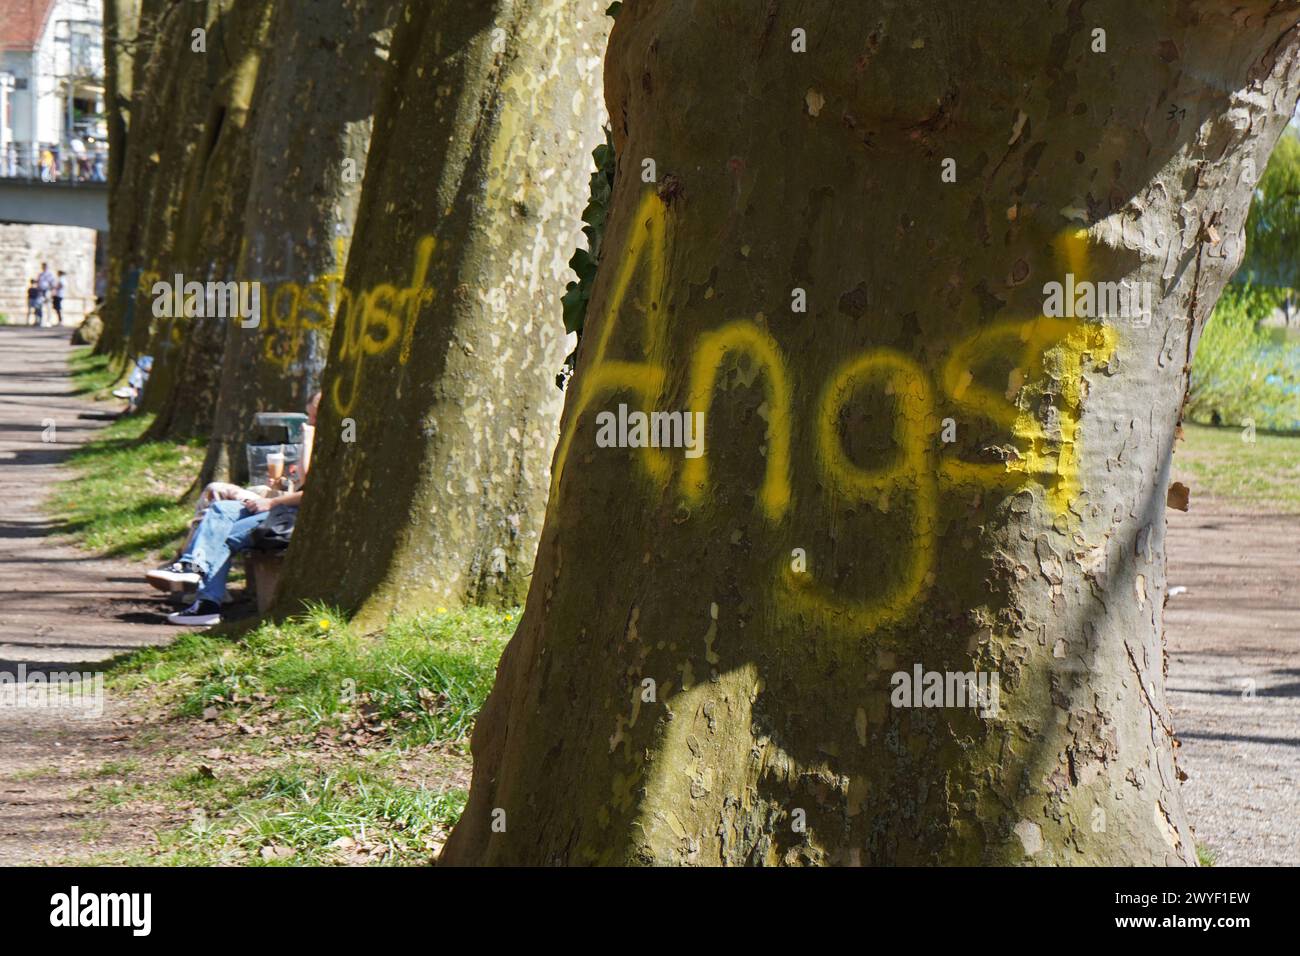 Das Wort Angst als Graffiti an mehrere Bäume gesprüht, Platanenallee in Tübingen, Baden-Württemberg, Deutschland *** The word Angst sprayed as graffit Stock Photo